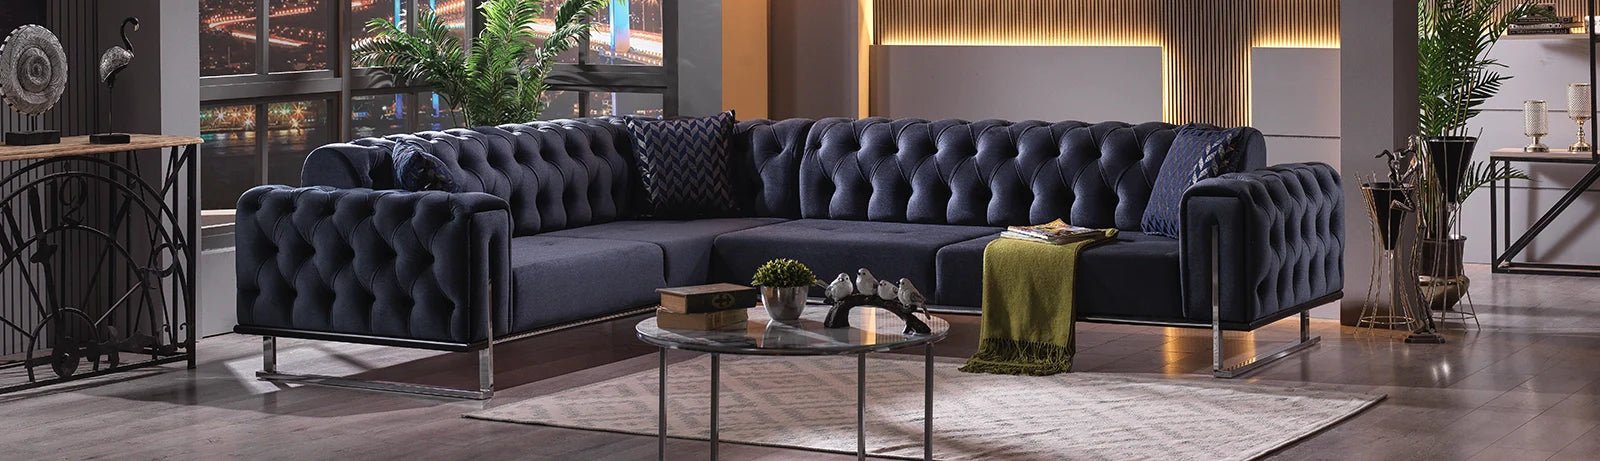 Sectional Sofa - Berre Furniture